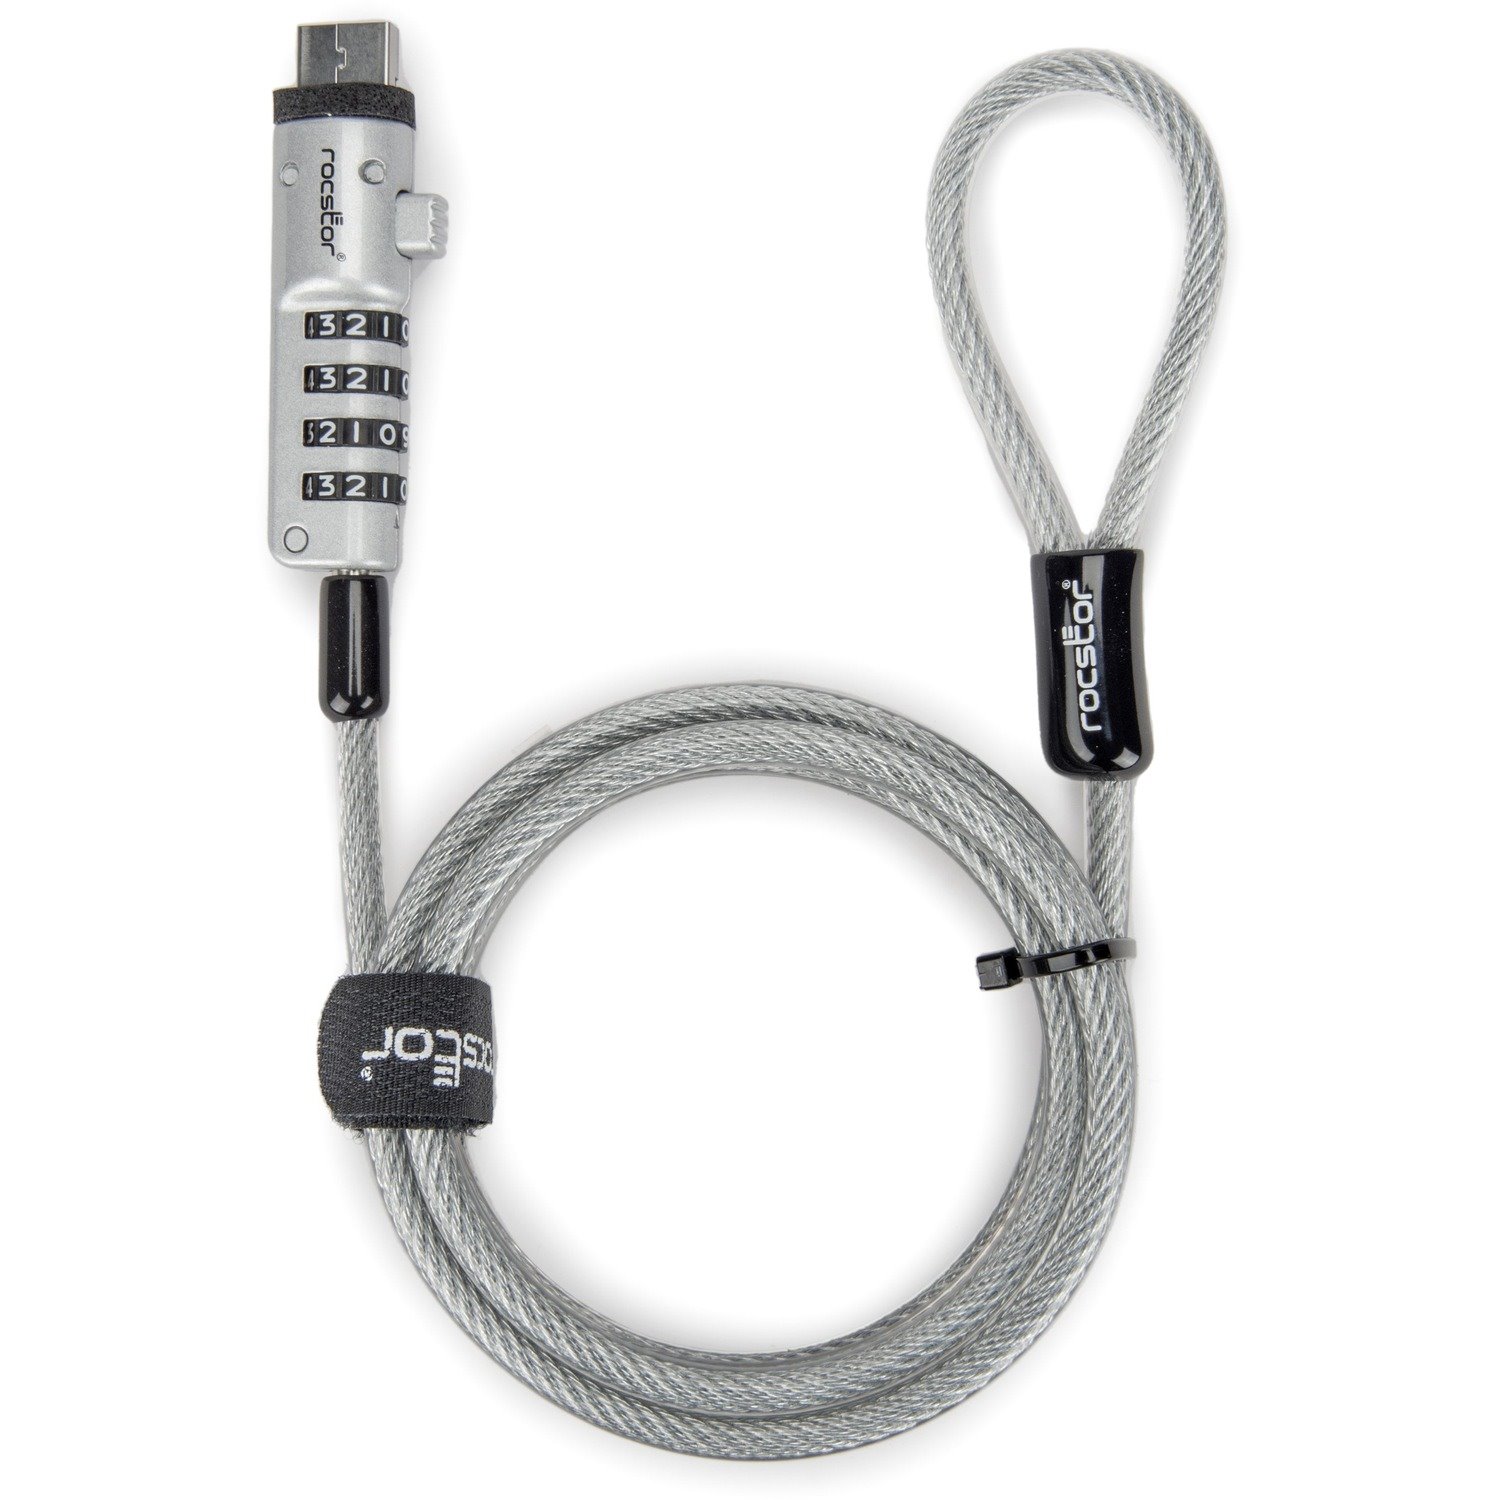 Rocstor Rocbolt USB 4-digit Combination Cable Lock System for PC